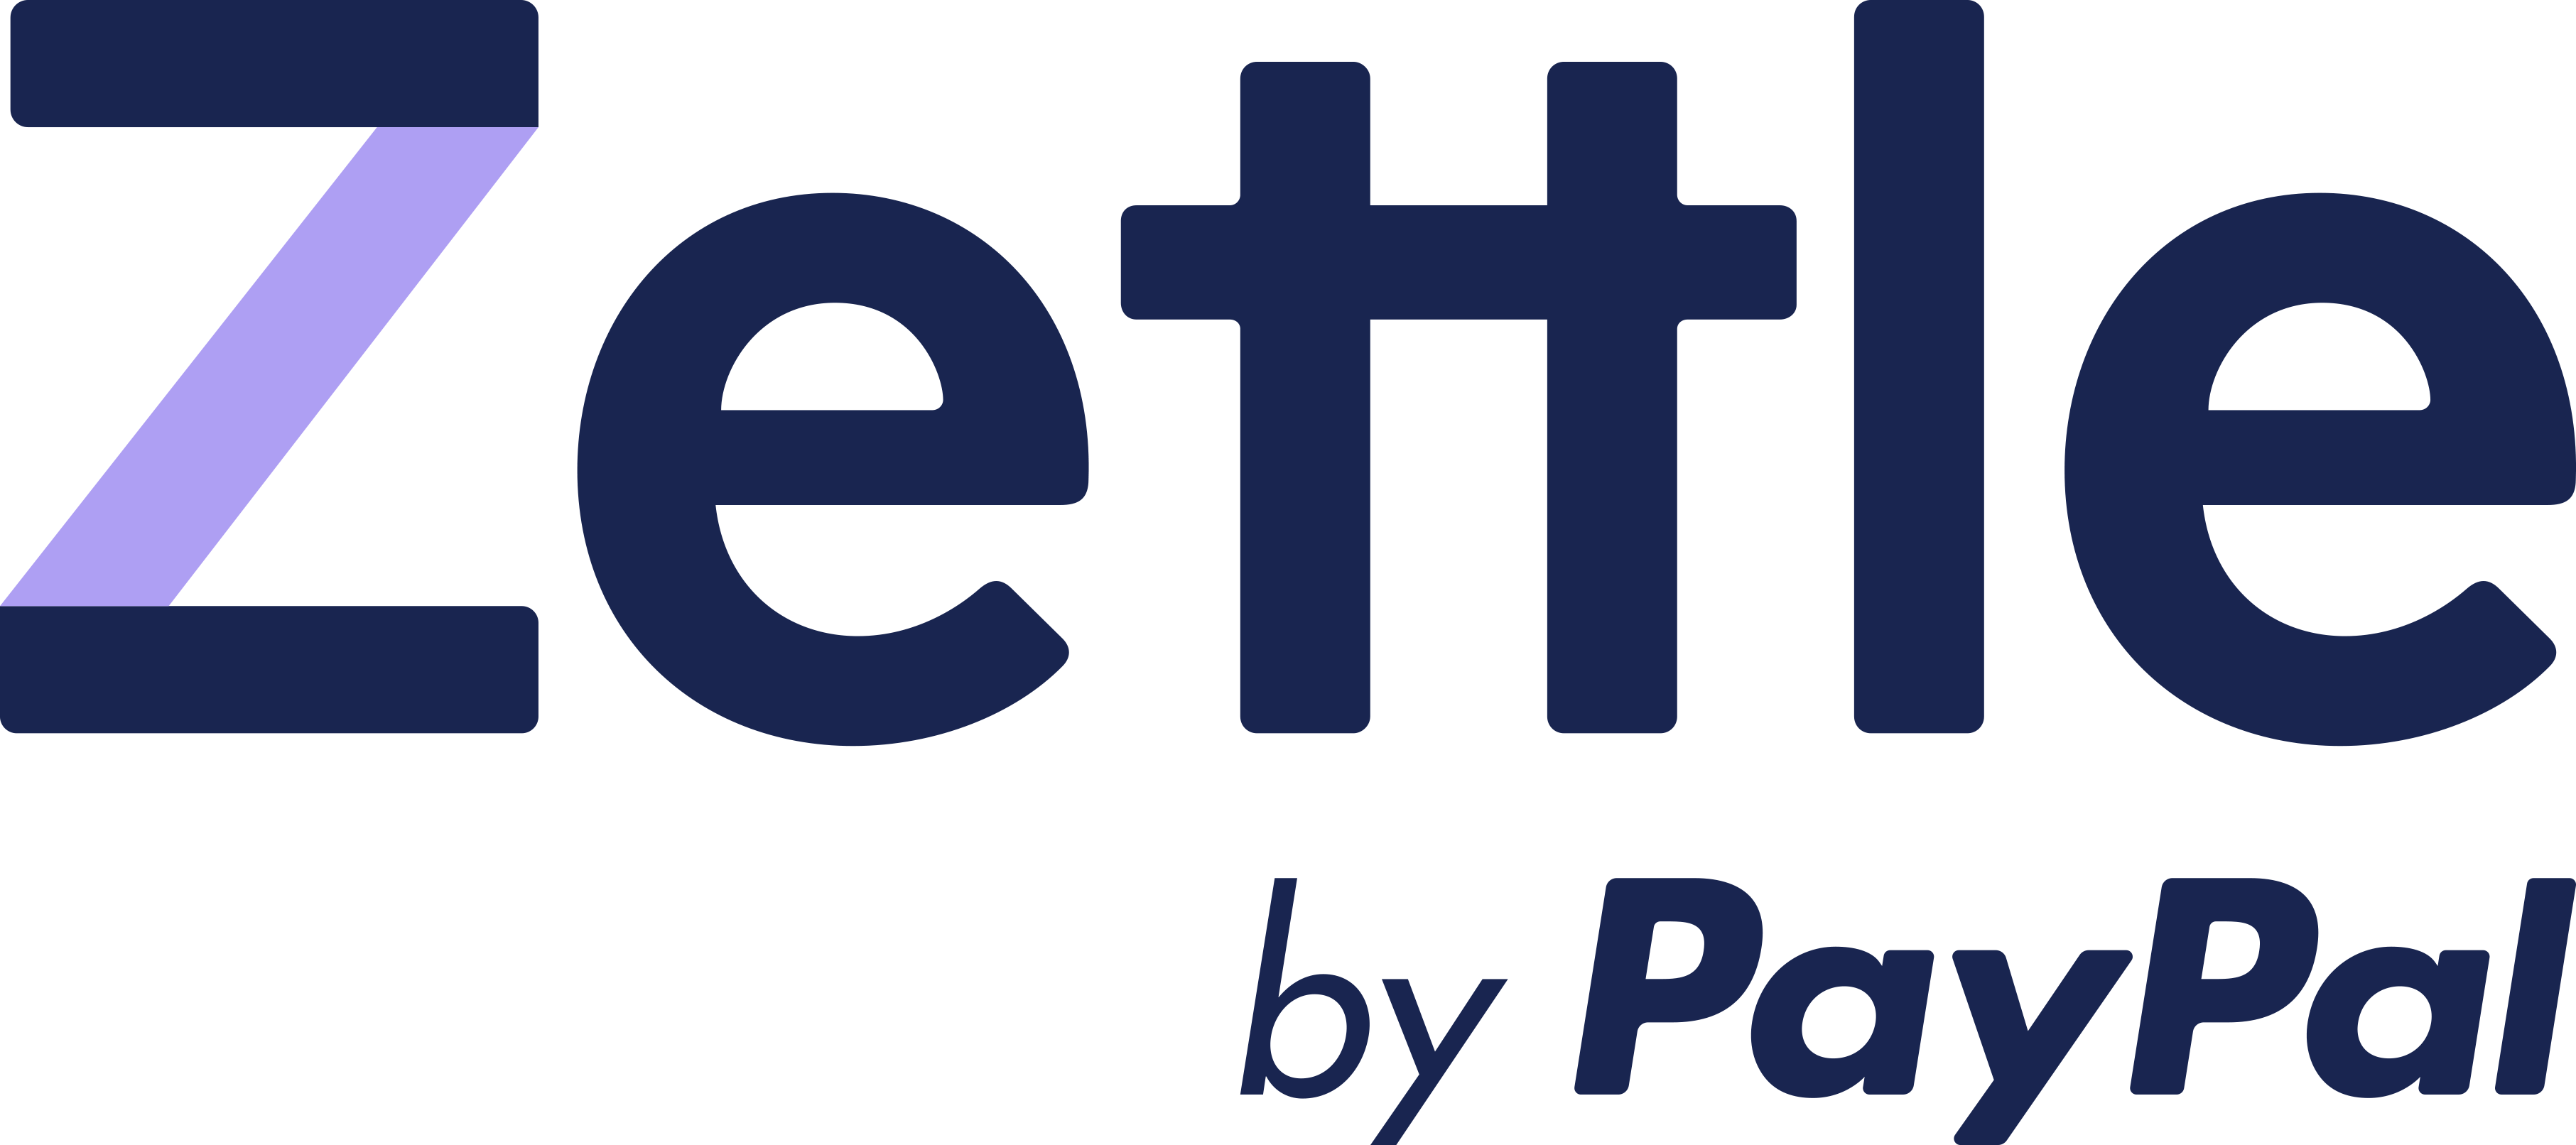 Zettle by Paypal logo